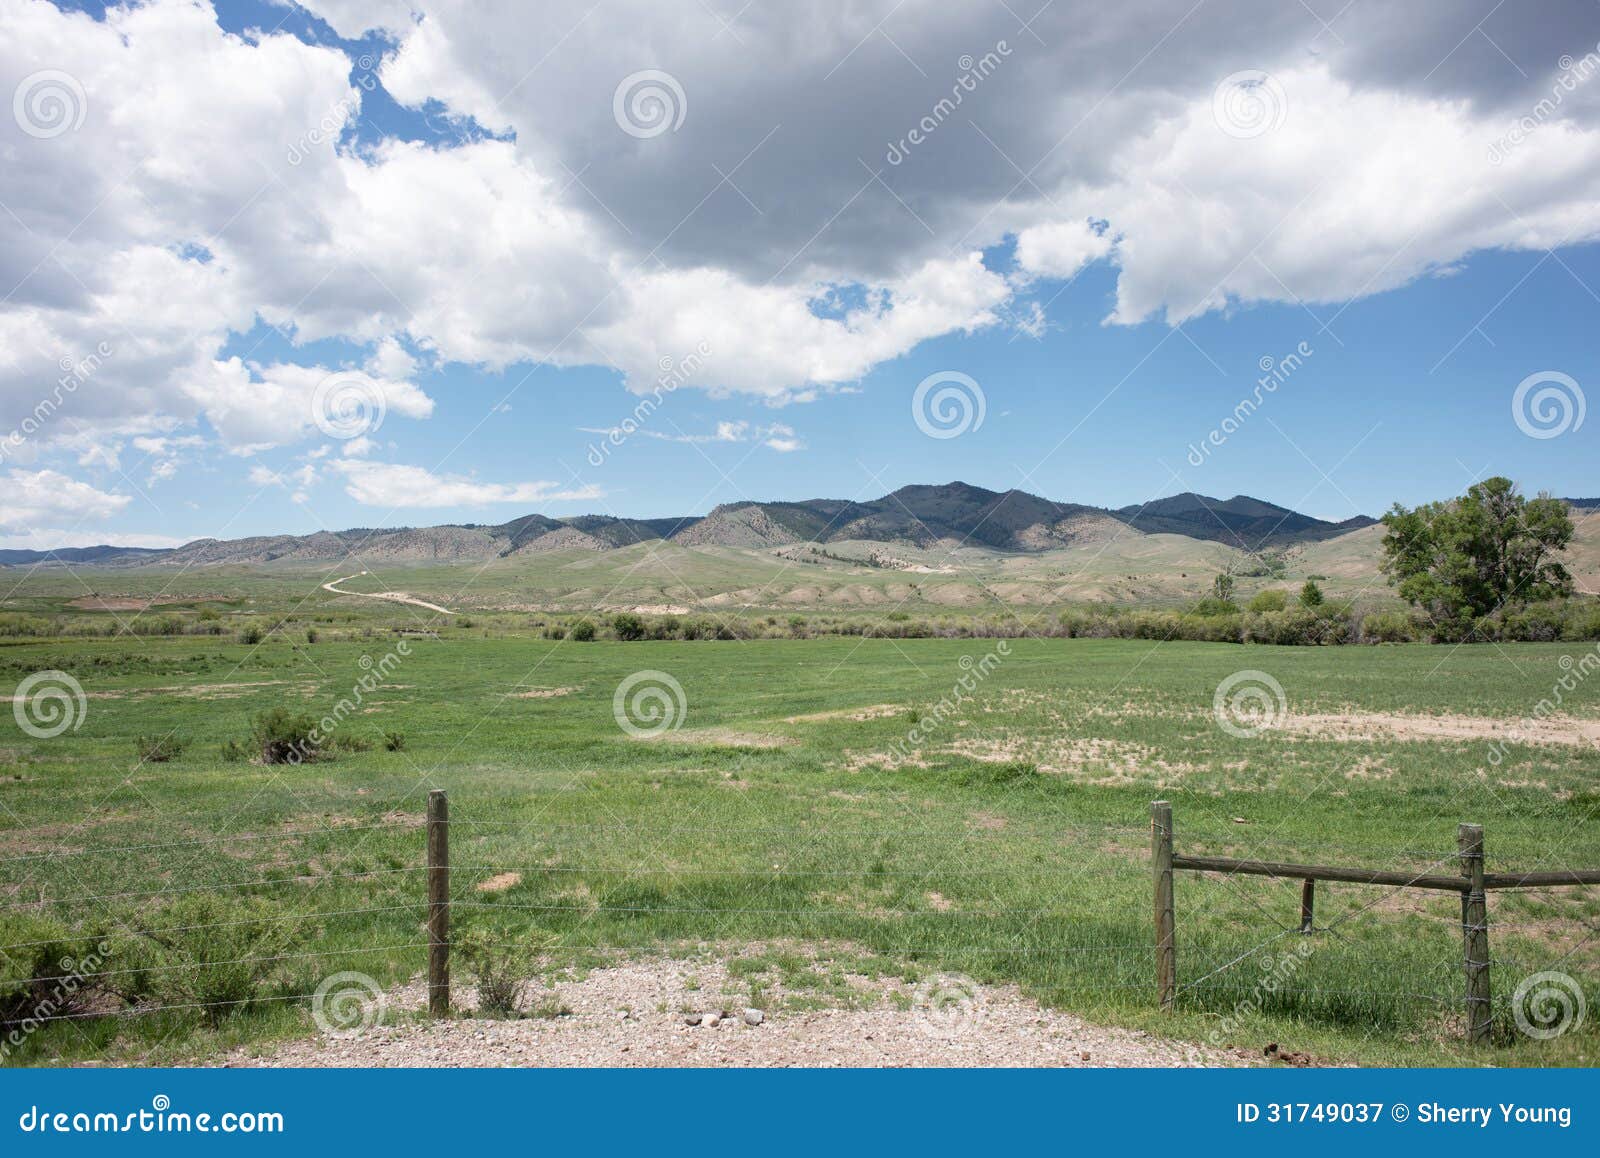 montana ranch